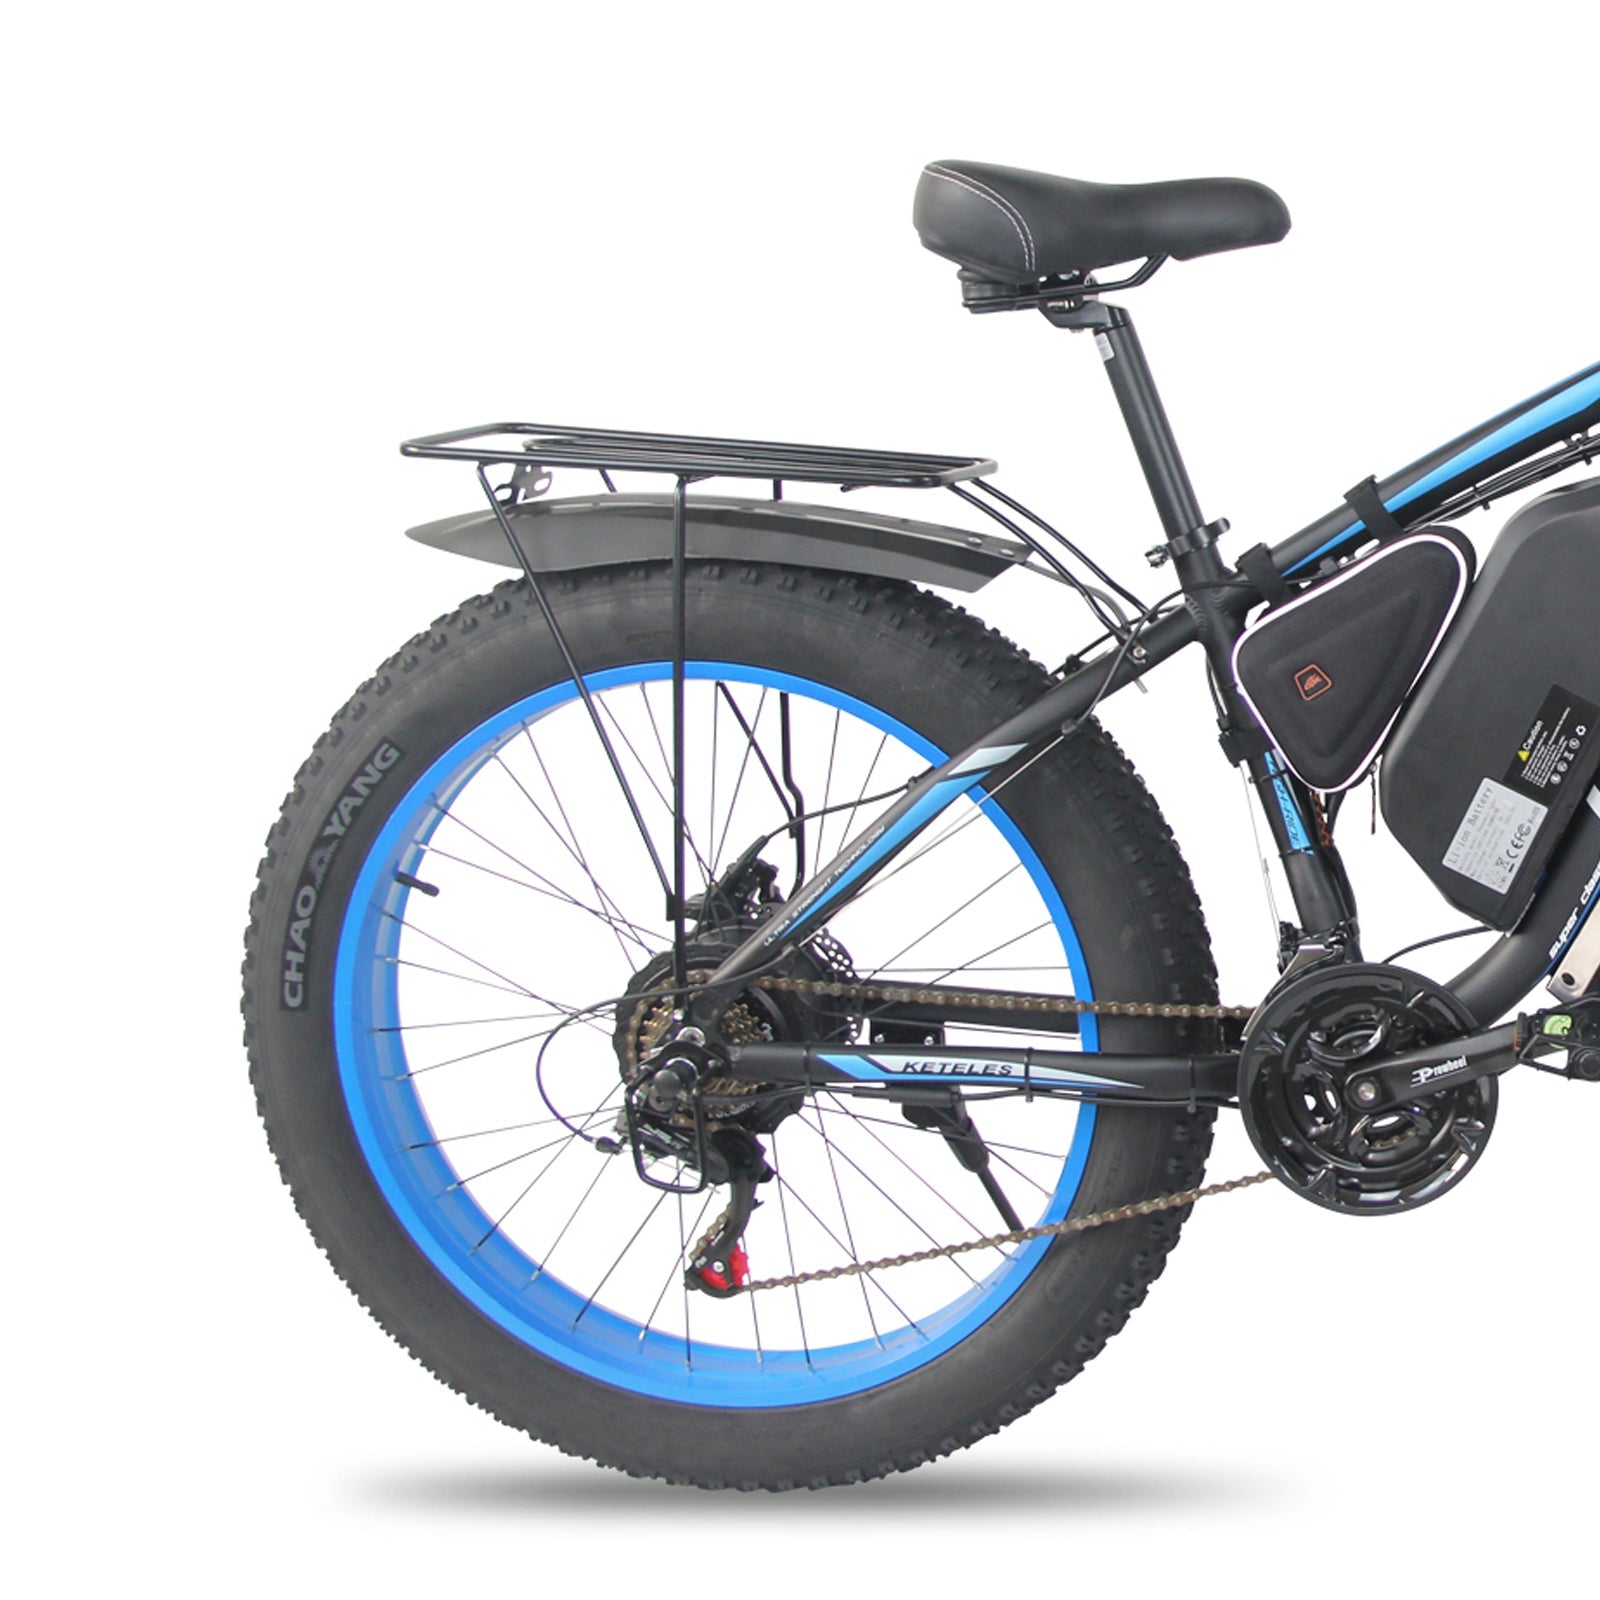 GOGOBEST E-Bike Rear Rack Seatpost-Mounted Bicycle Holder